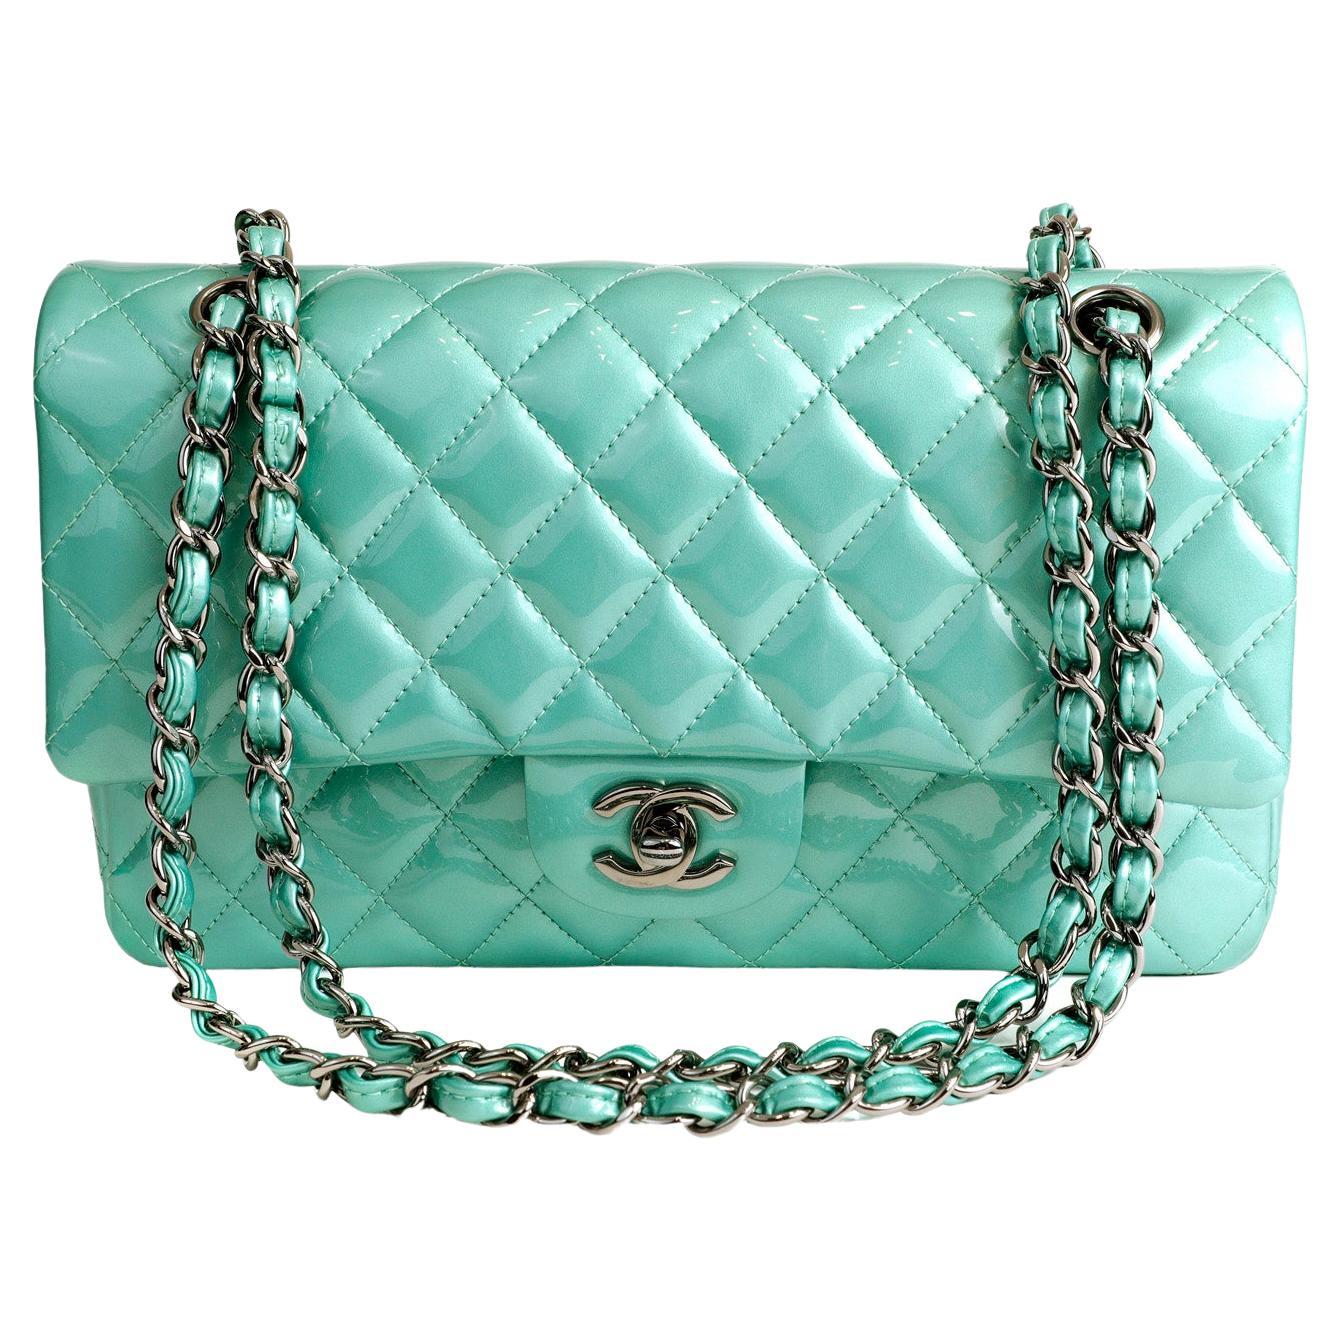 Chanel Metallic Green Patent Leather Medium Classic Flap Bag